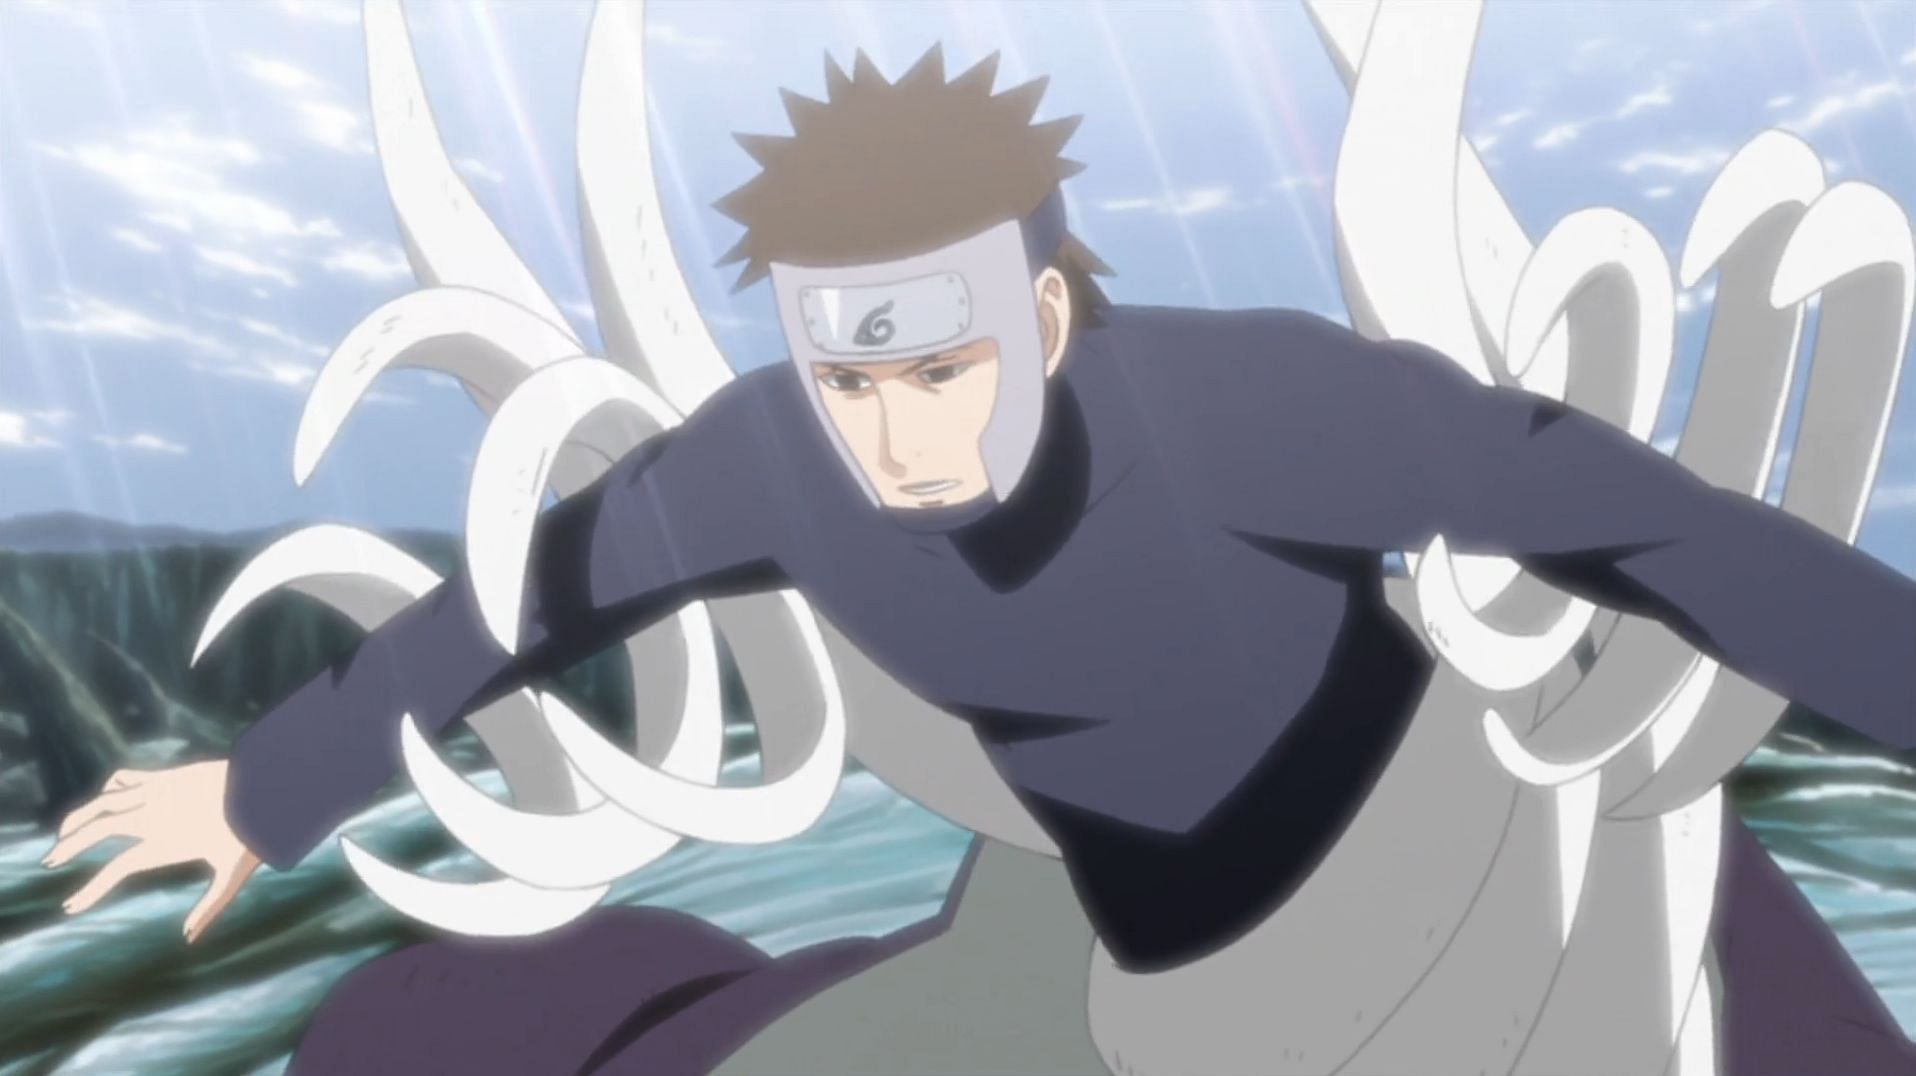 Yamato as seen in the anime Naruto (Image via Studio Pierrot)